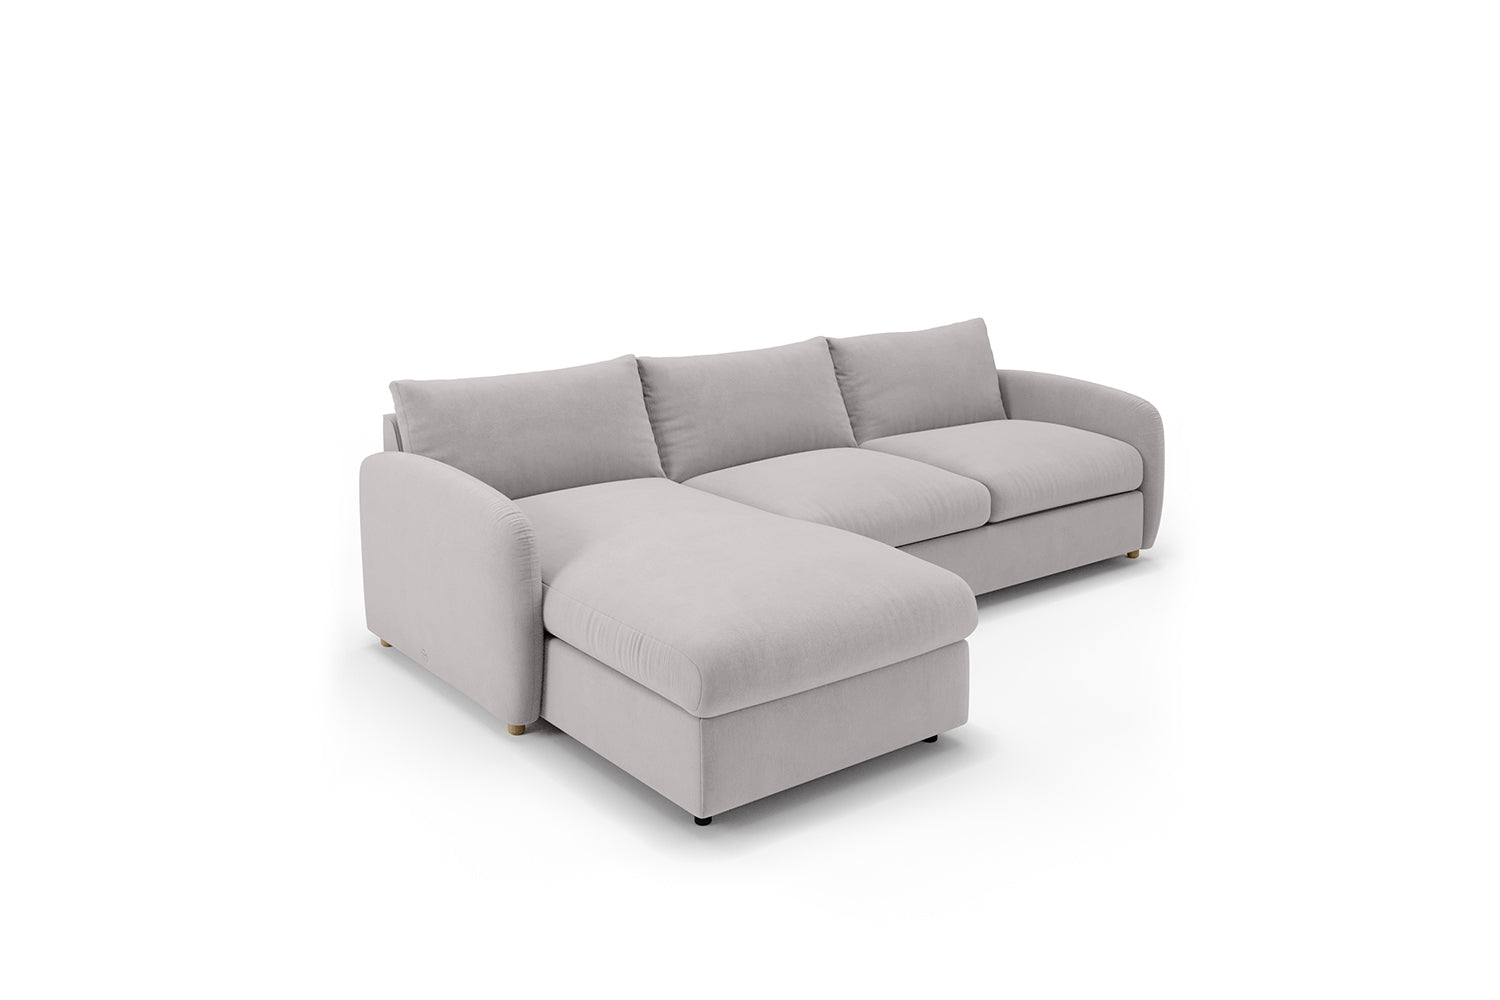 The Small Biggie - Chaise Sofa Bed - Warm Grey